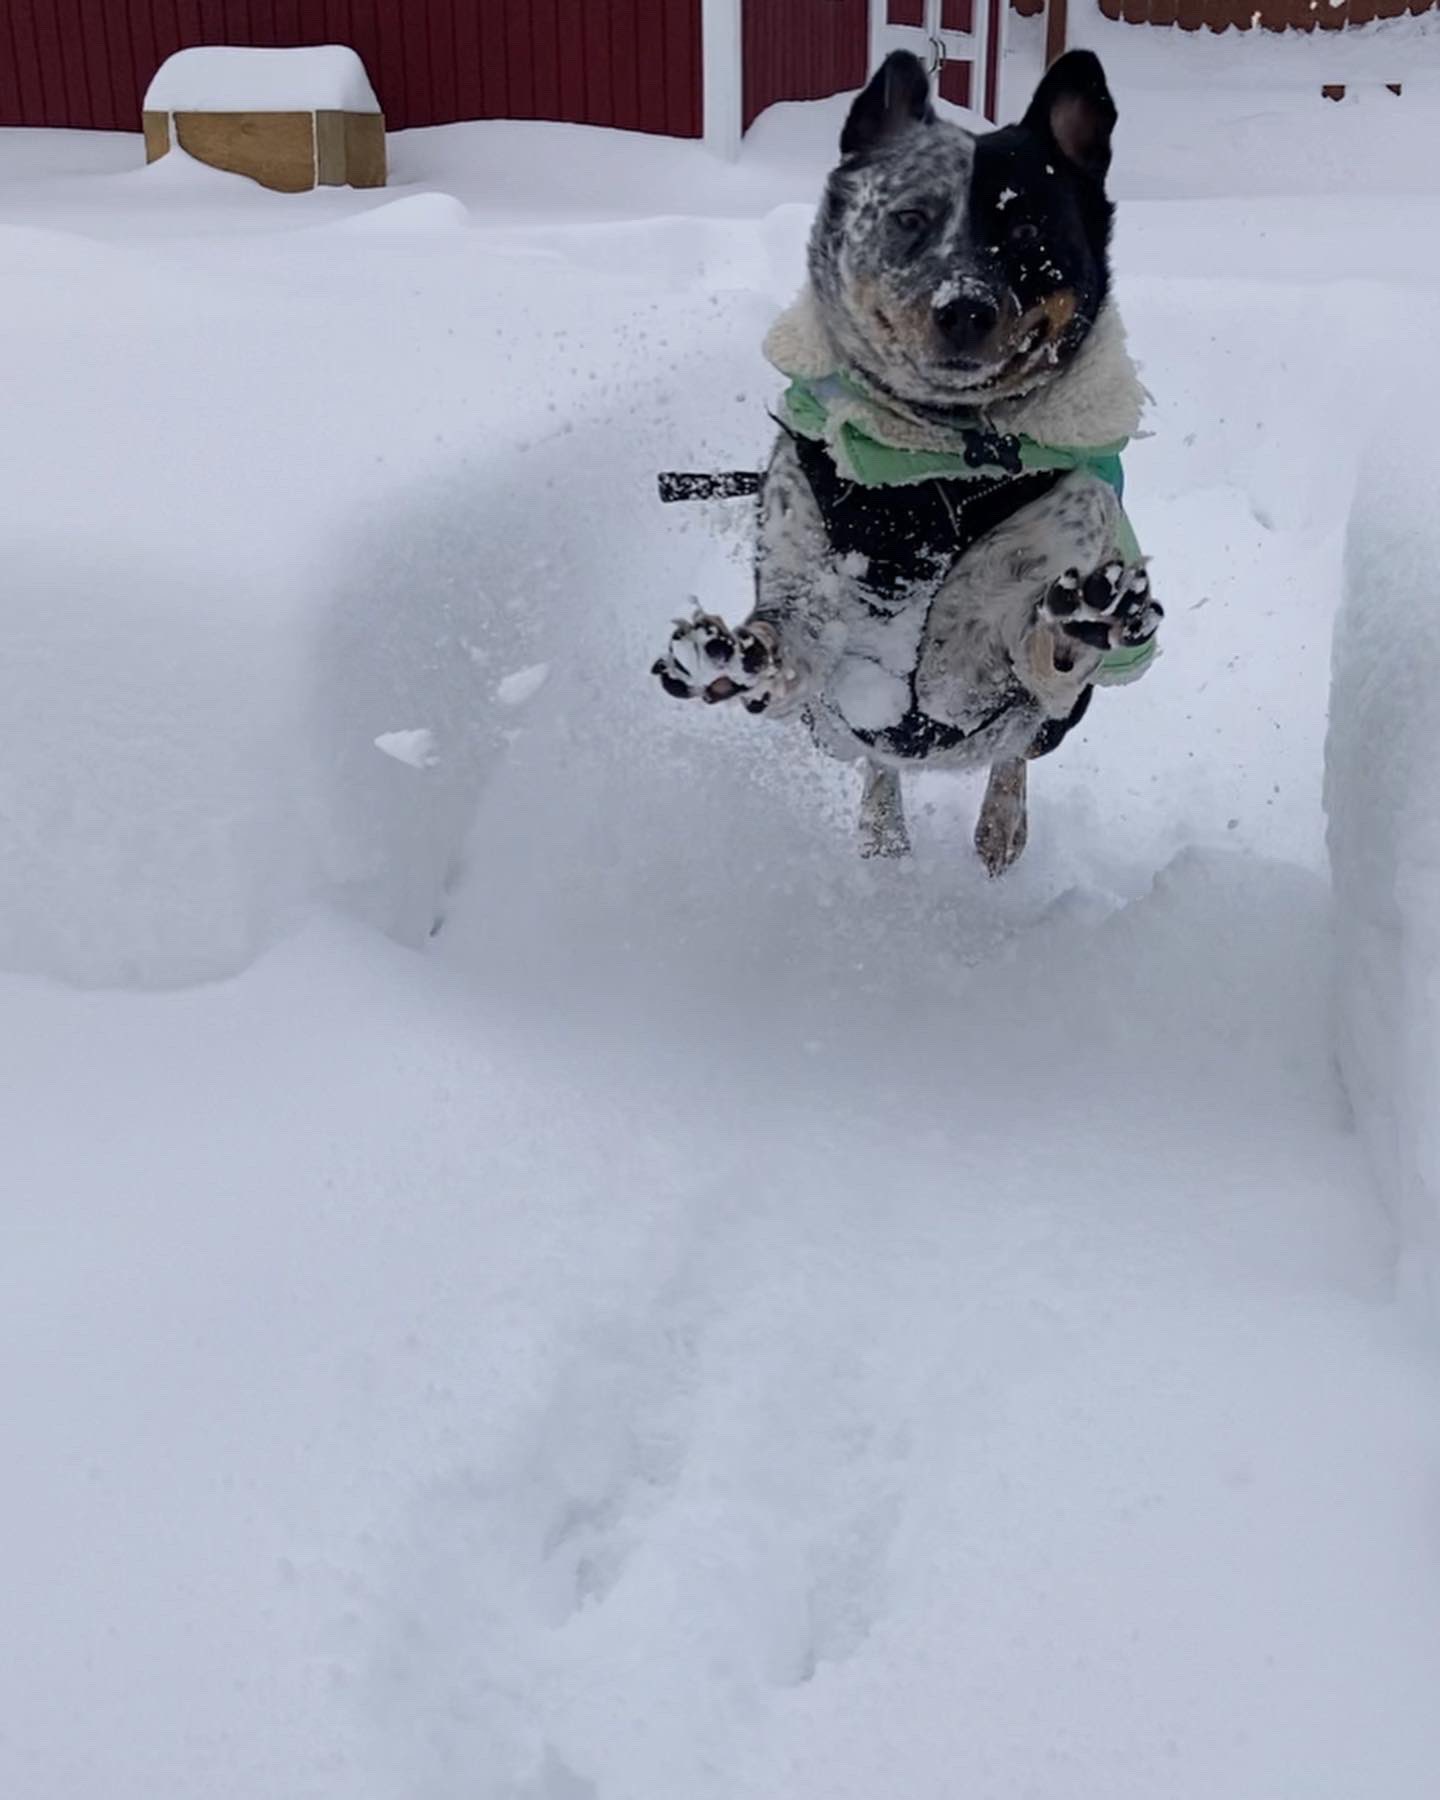 dog flying through air over deep snow drifts in Buffalo, NY.